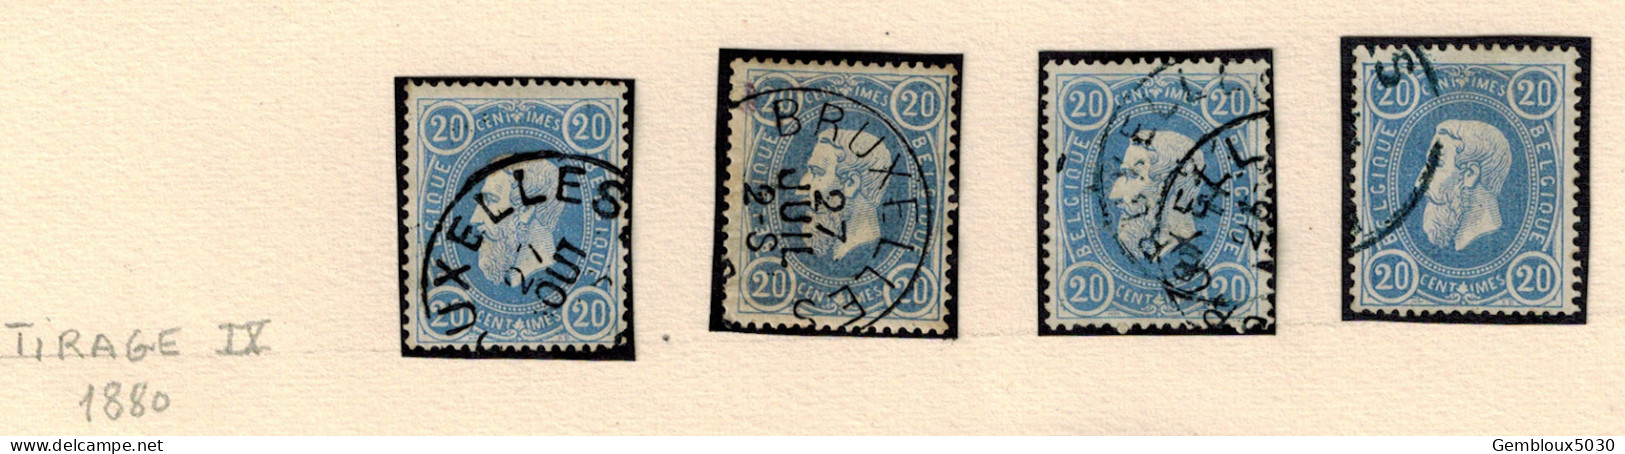 N° 31 (4x) 1880 Tirage IX - Lots & Kiloware (mixtures) - Max. 999 Stamps